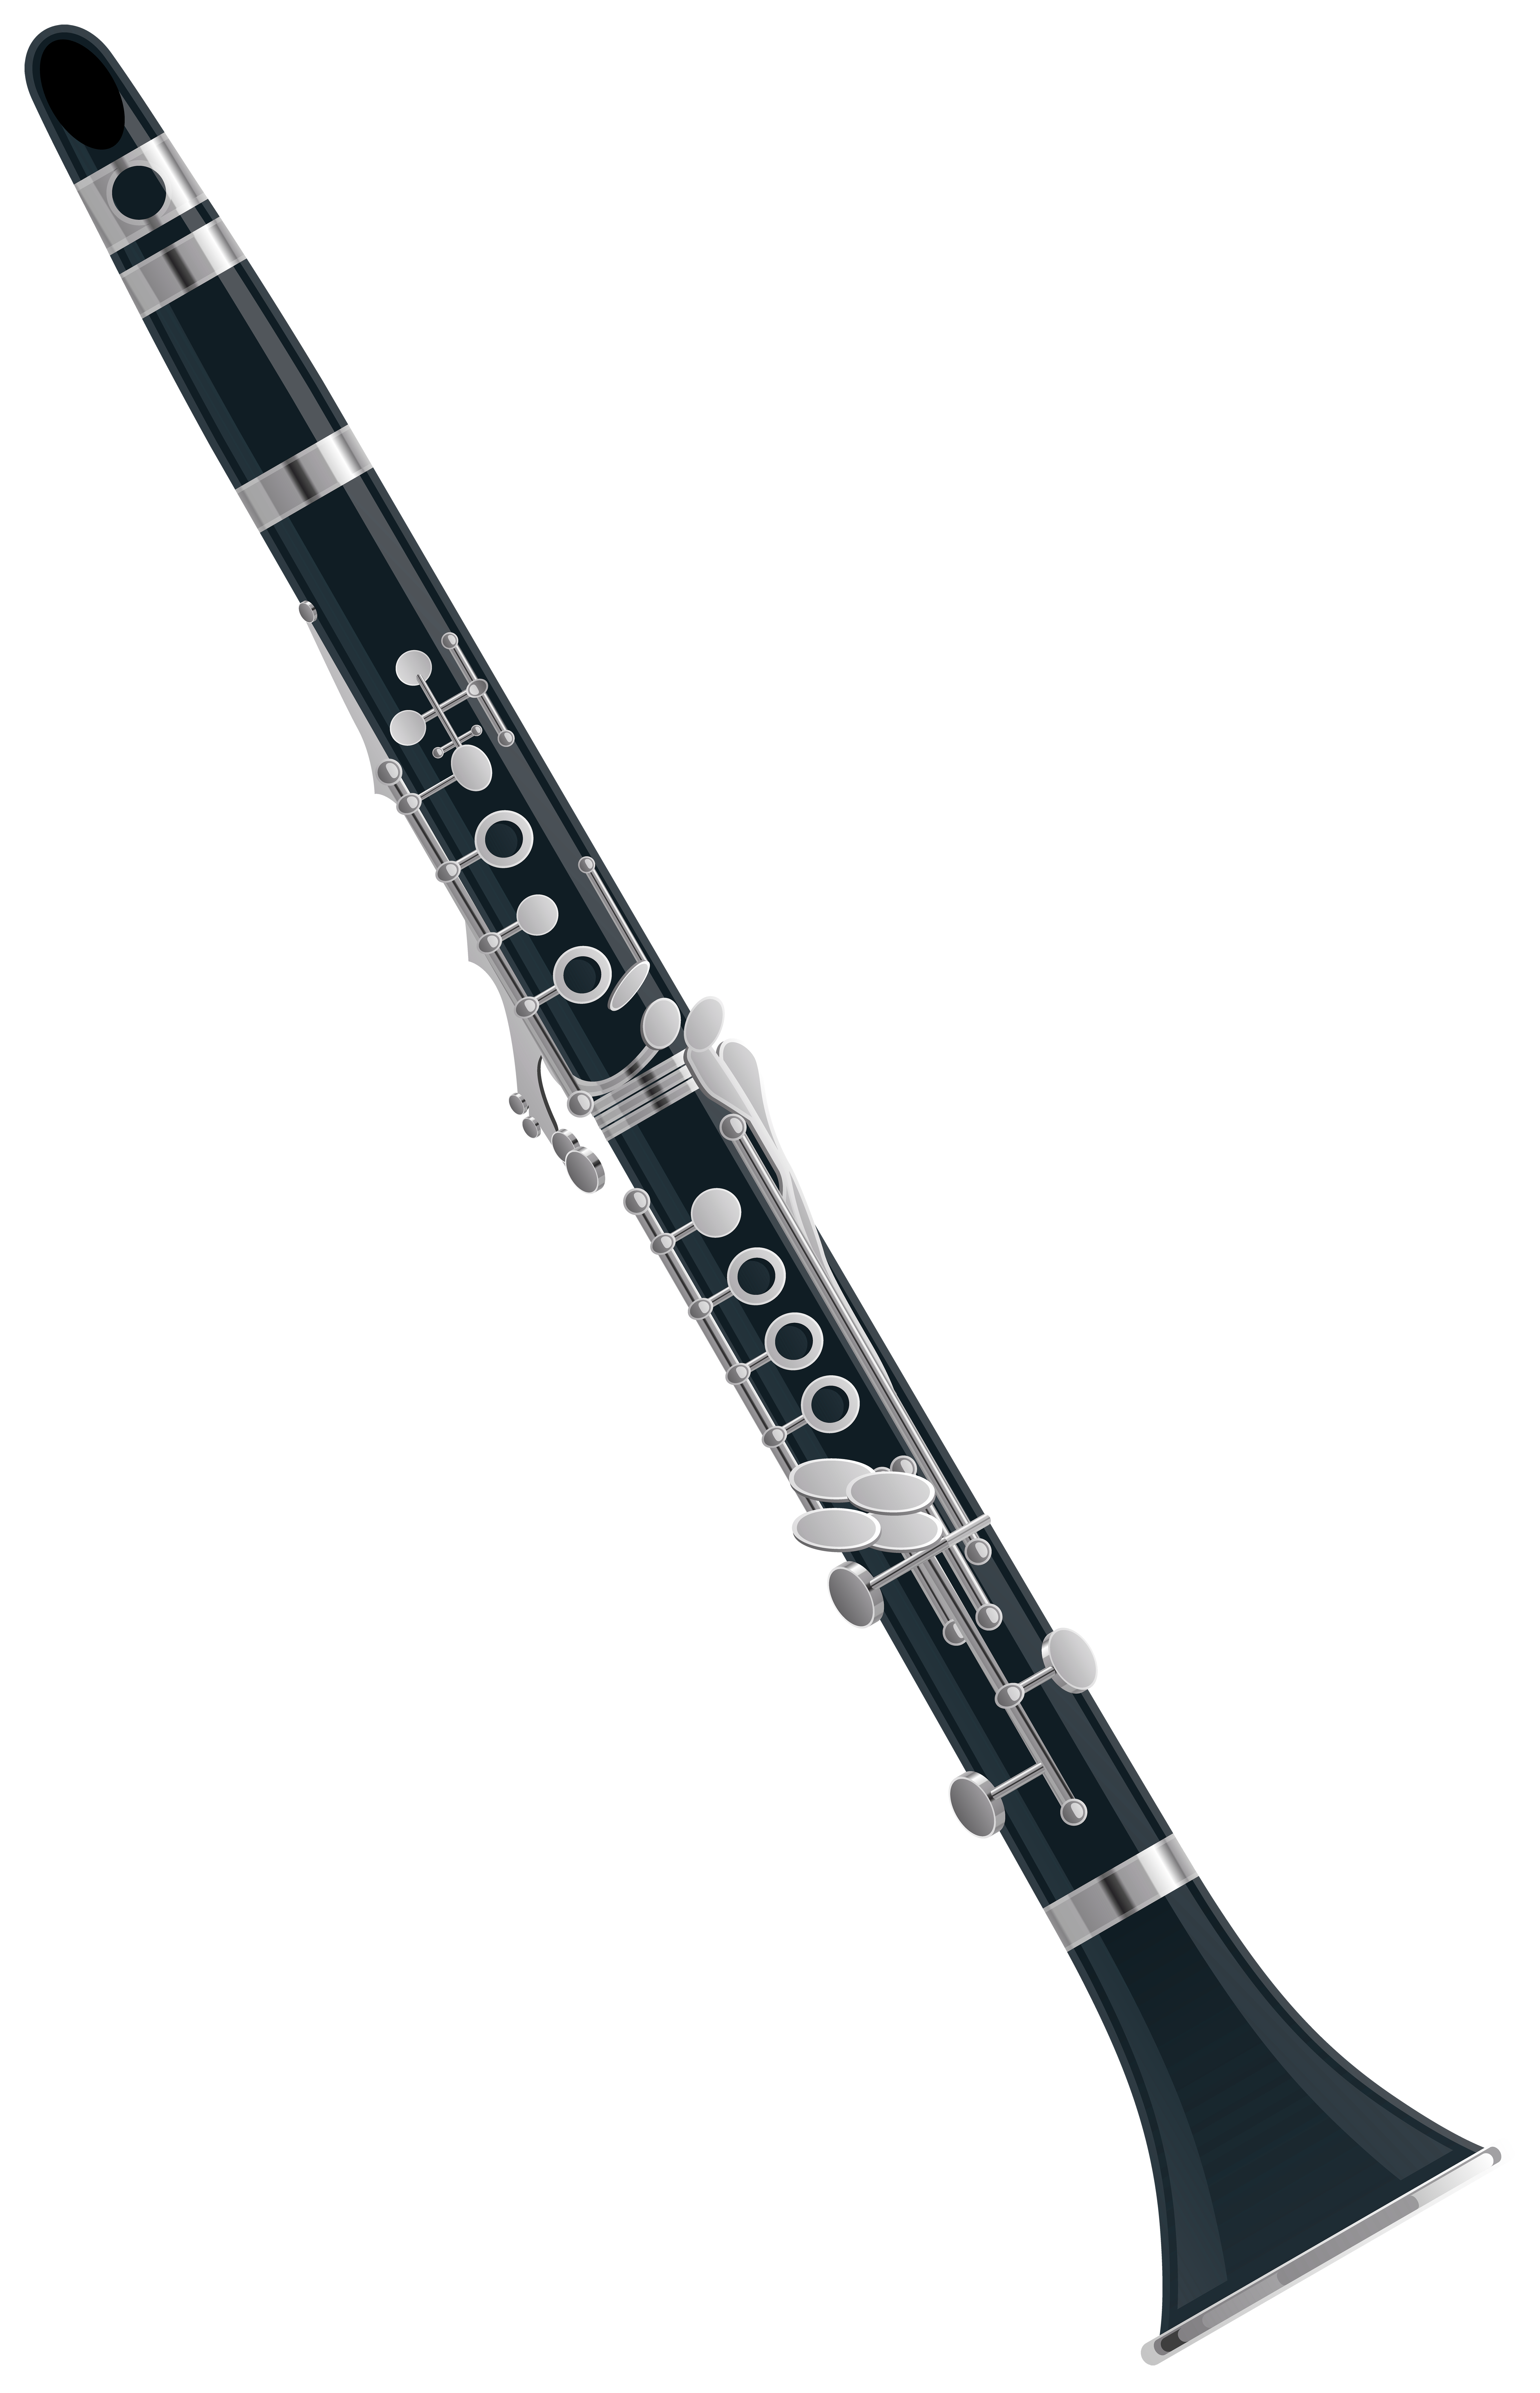 flute clipart clarinet